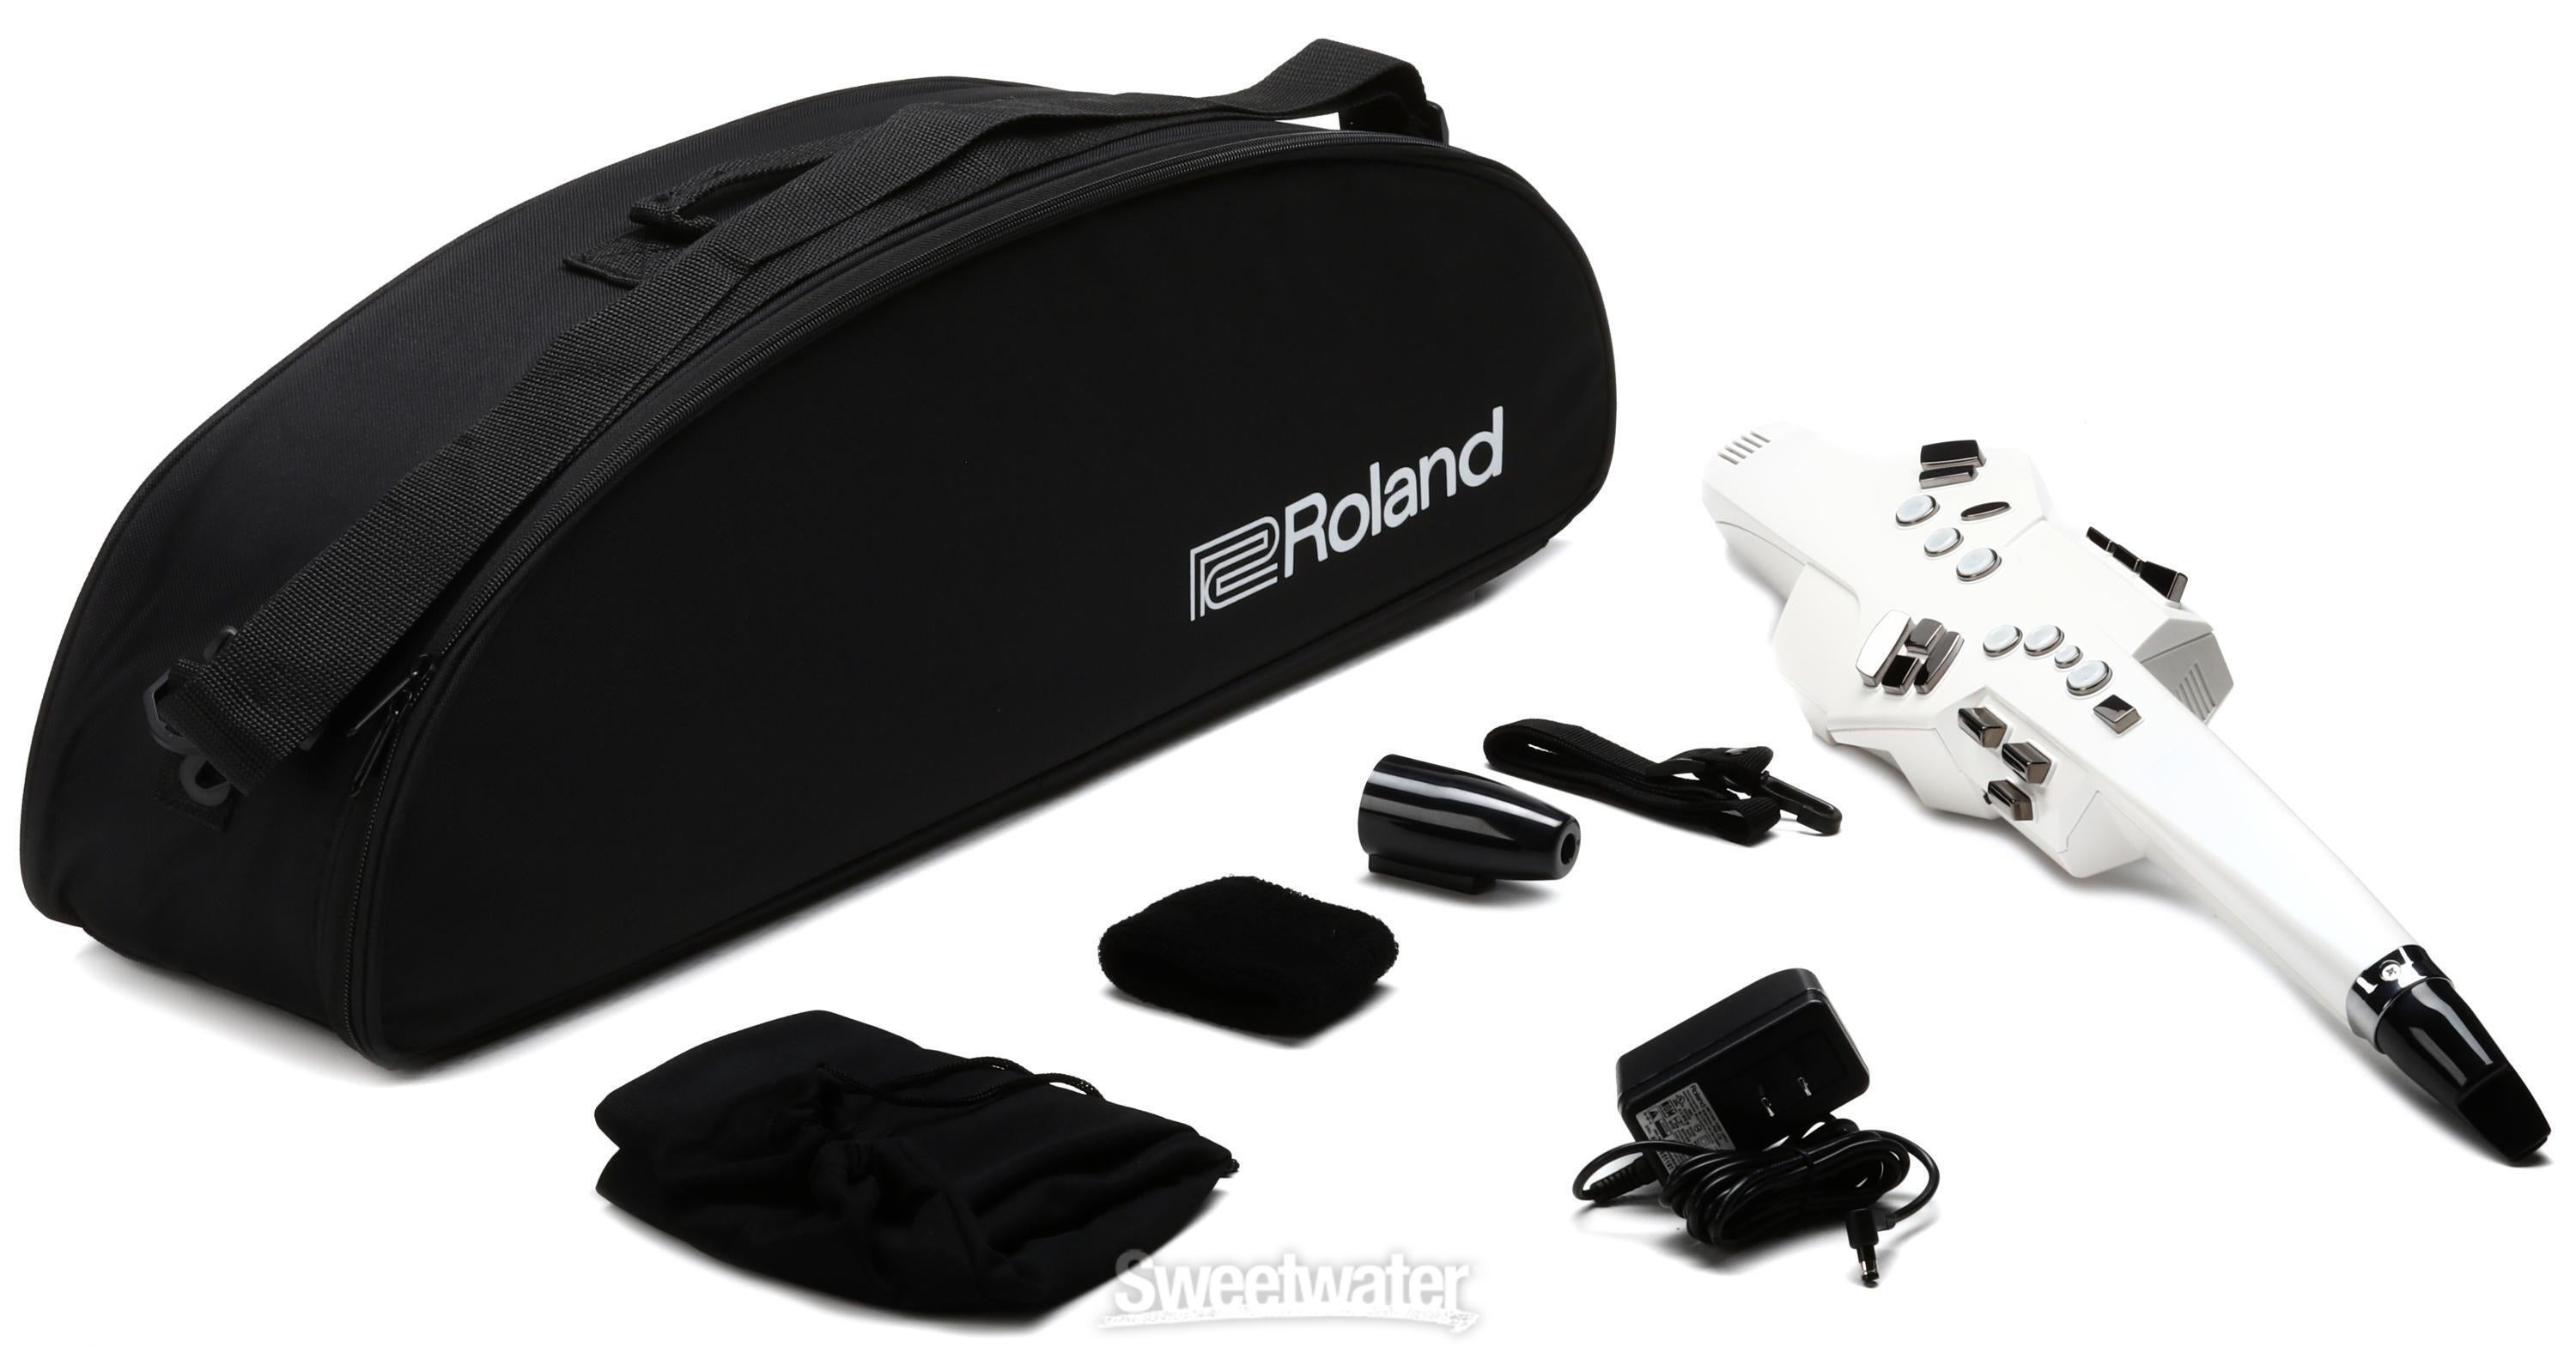 Roland Aerophone AE-10 Digital Wind Instrument - Silver | Sweetwater